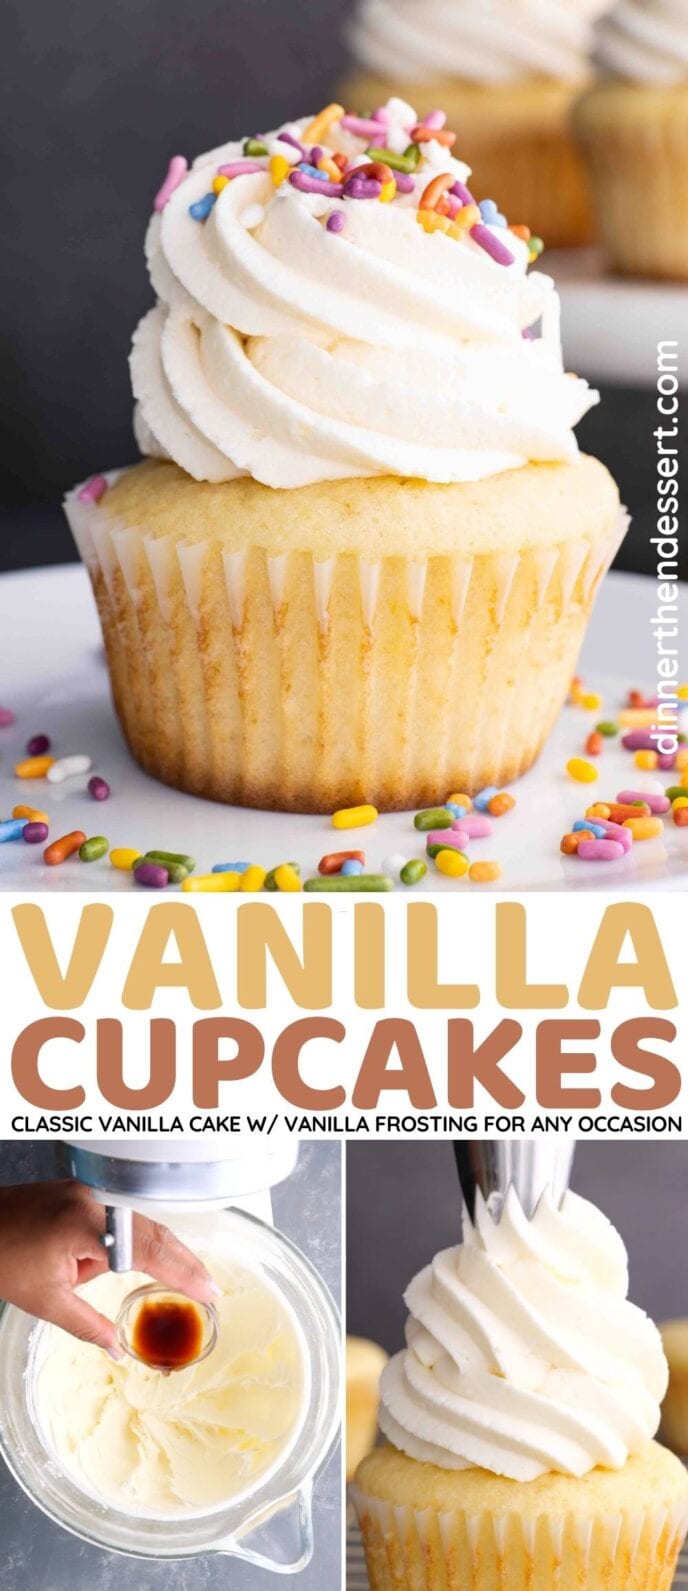 Vanilla Cupcakes Collage